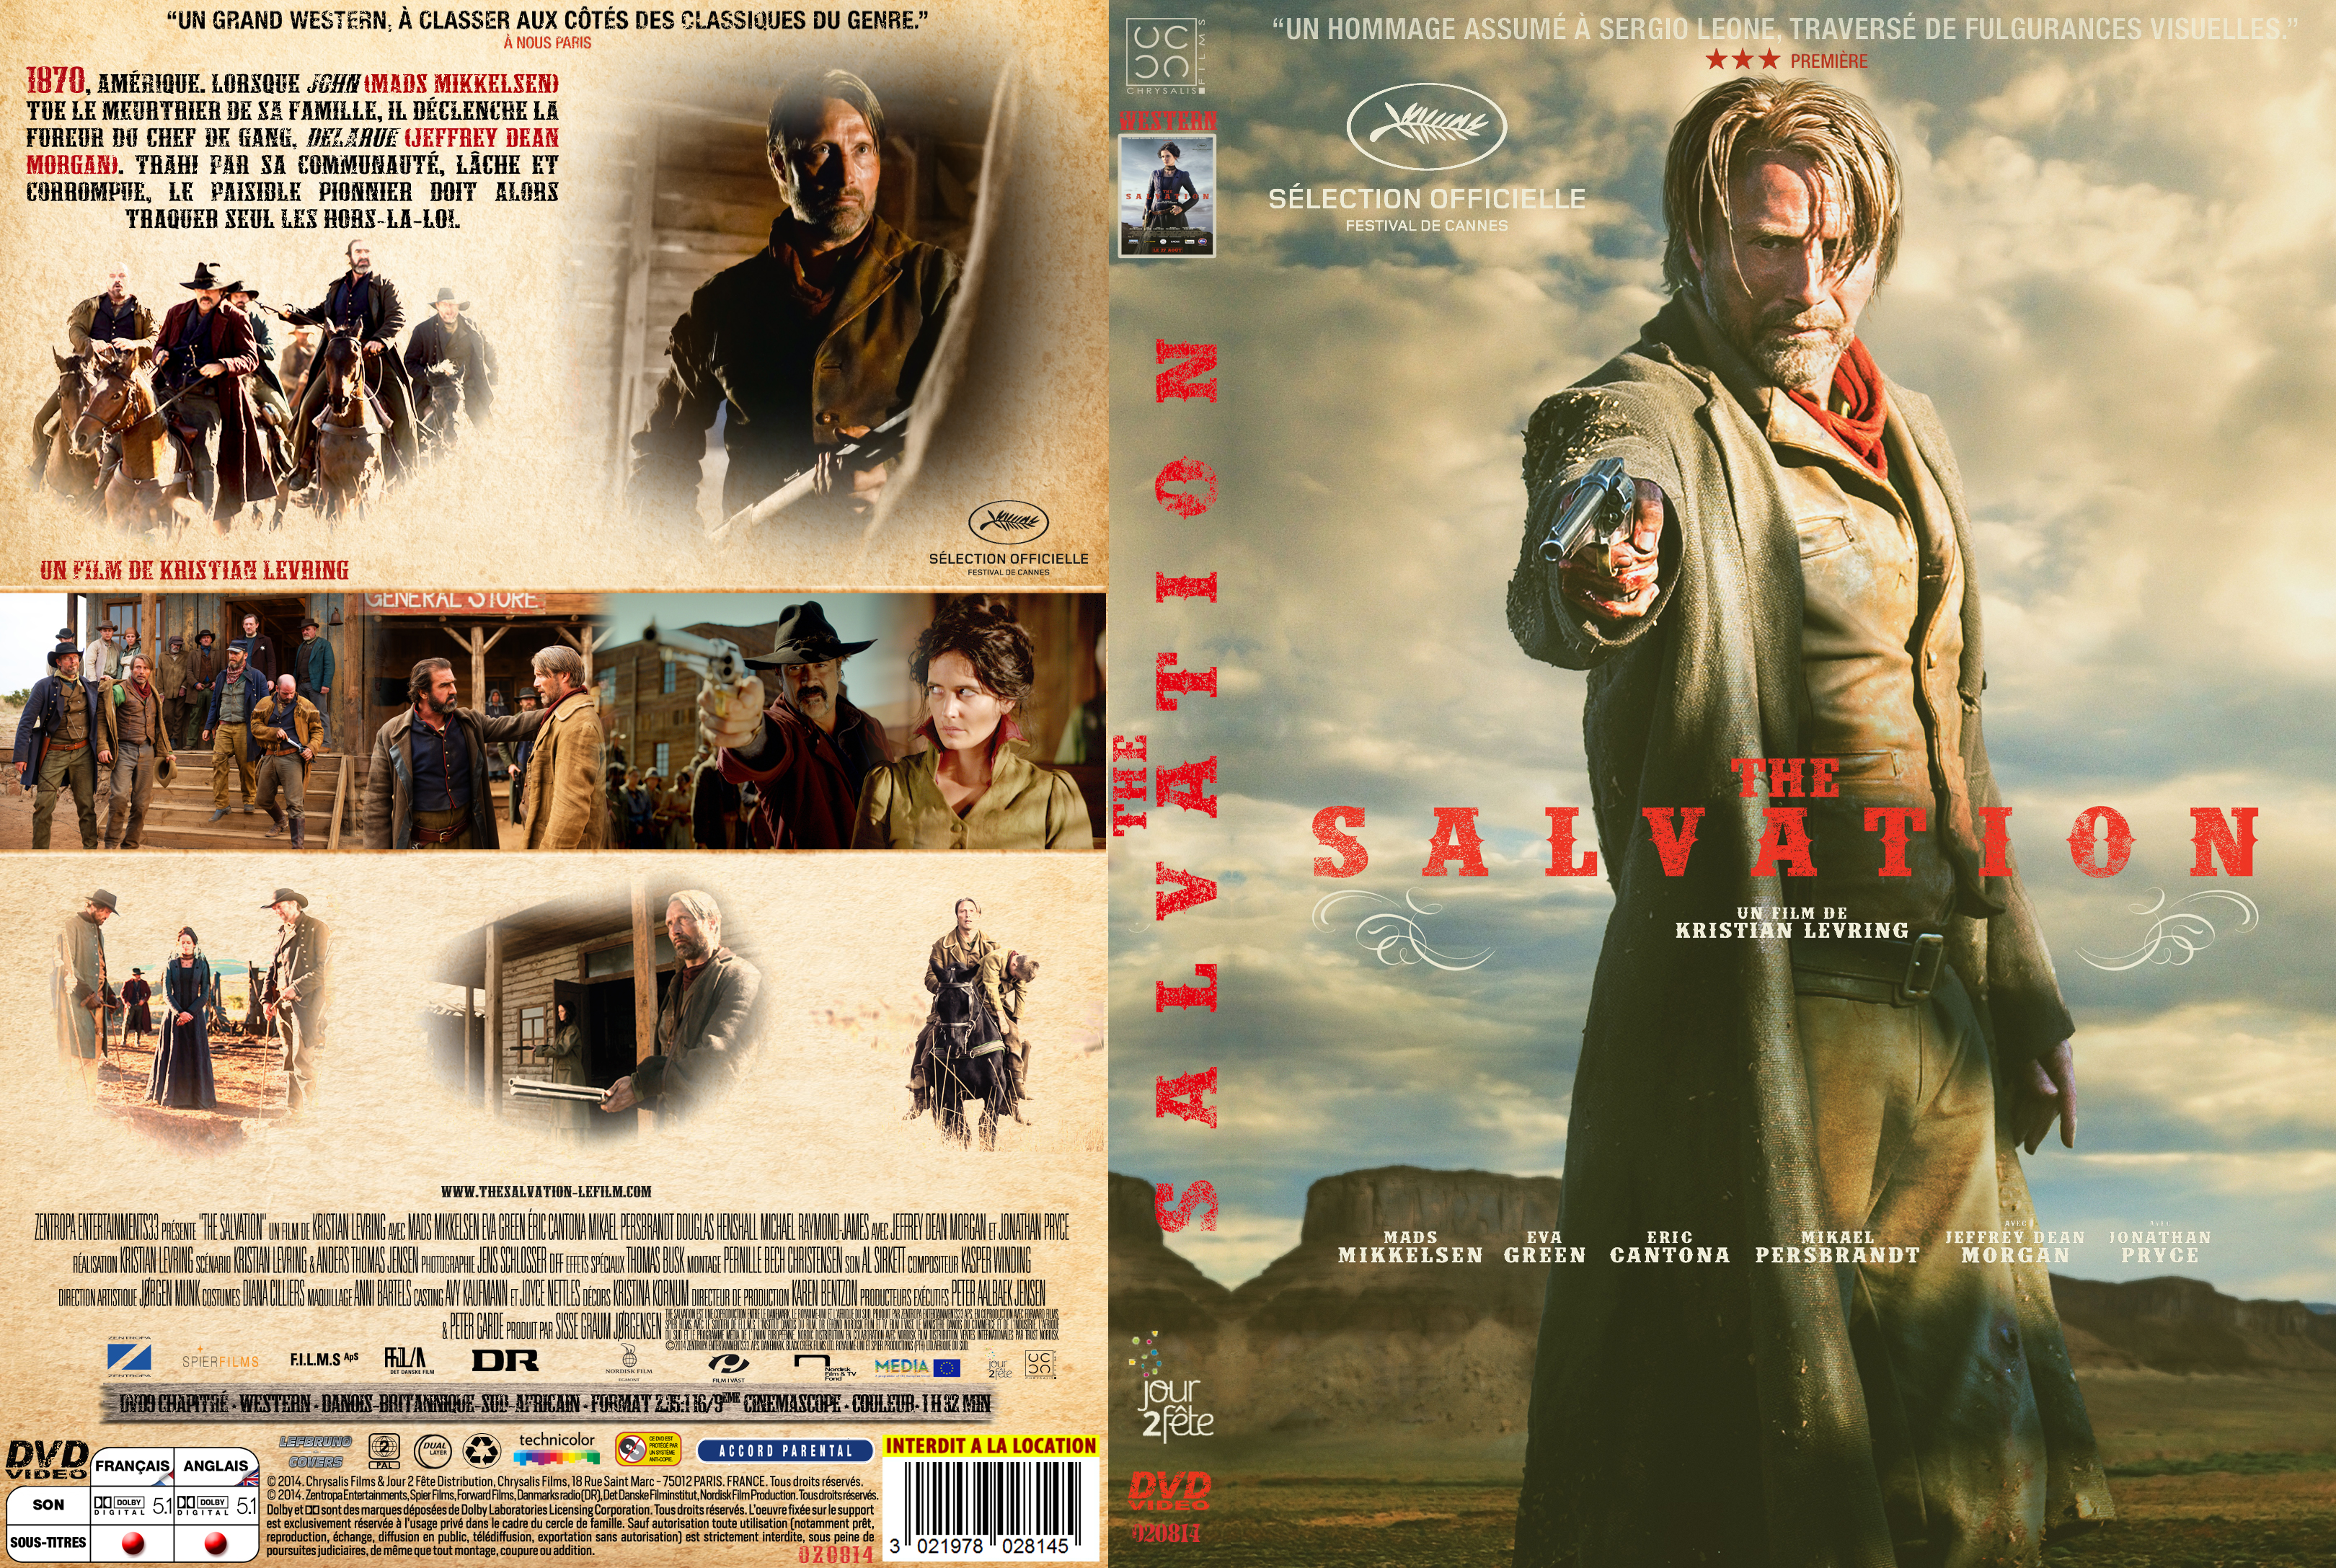 Jaquette DVD The Salvation custom